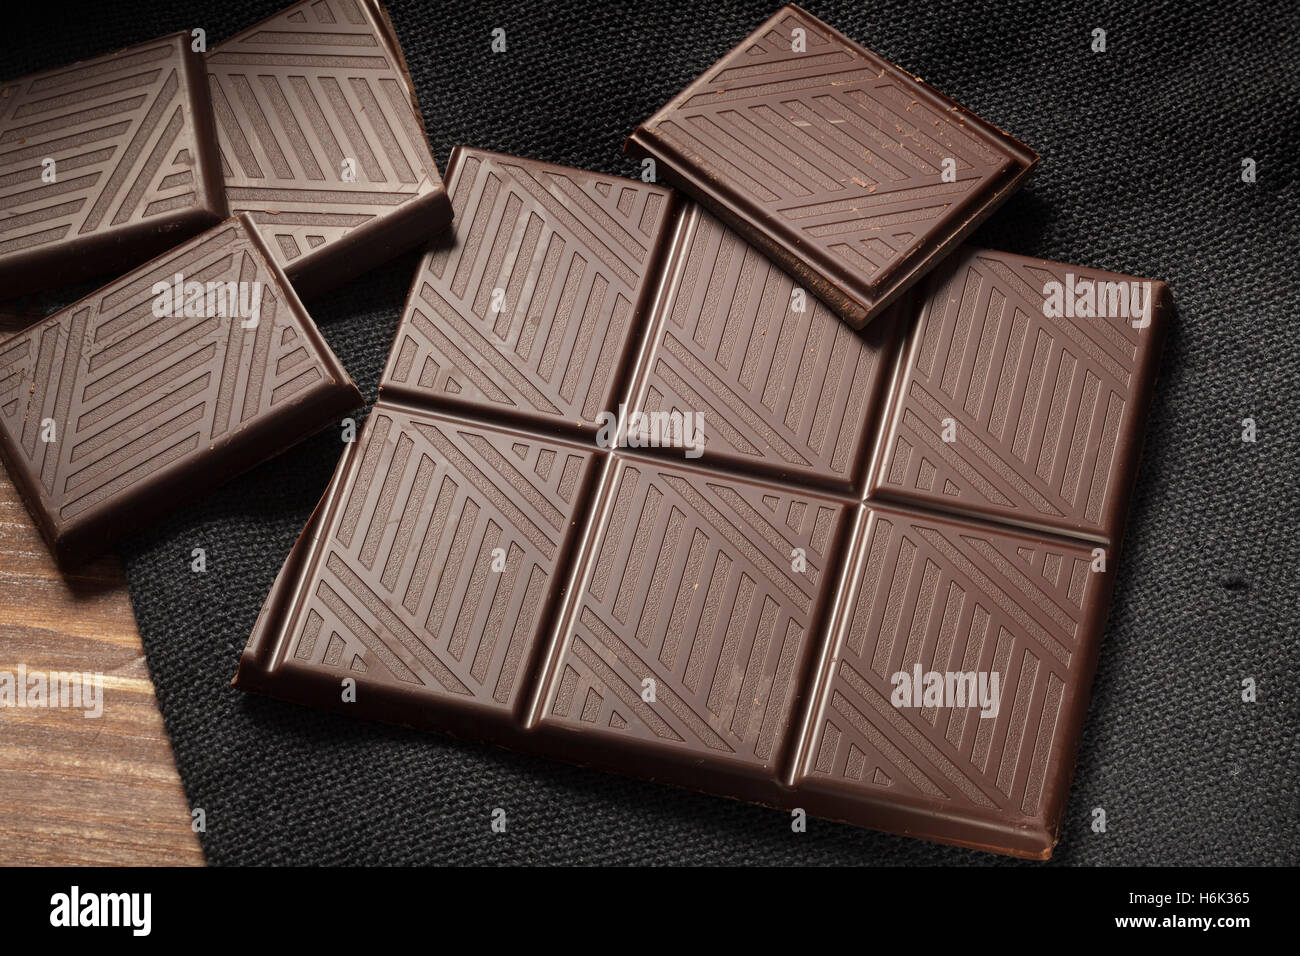 bar of chocolate Stock Photo